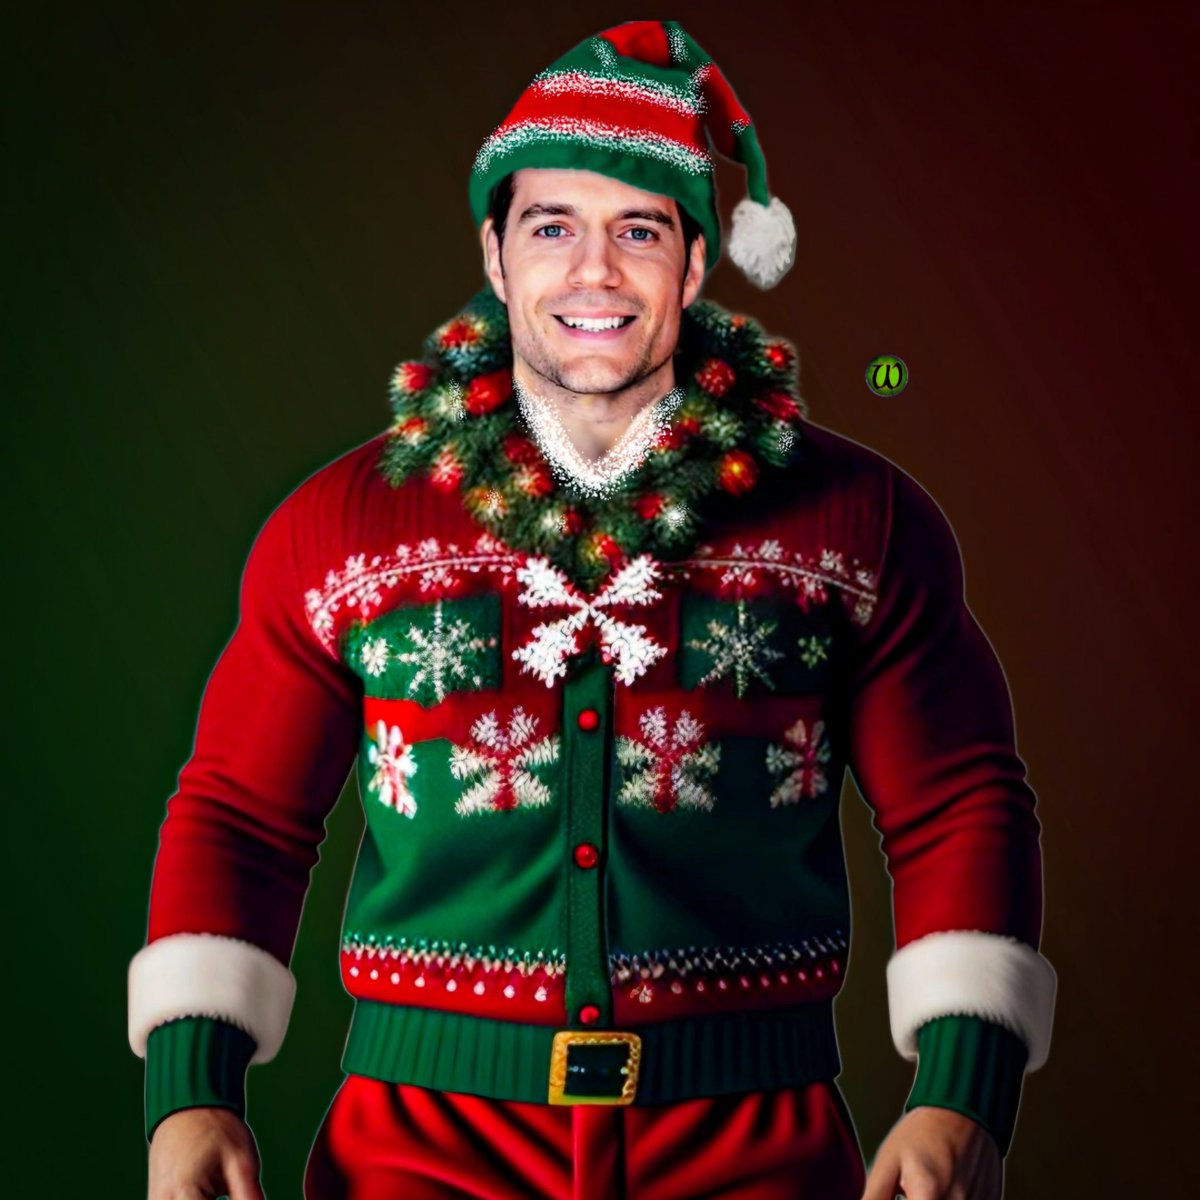 Ugly Christmas Sweater 🎄❤️🎄
#henrycavill #henrycavilledit #uglychristmassweater